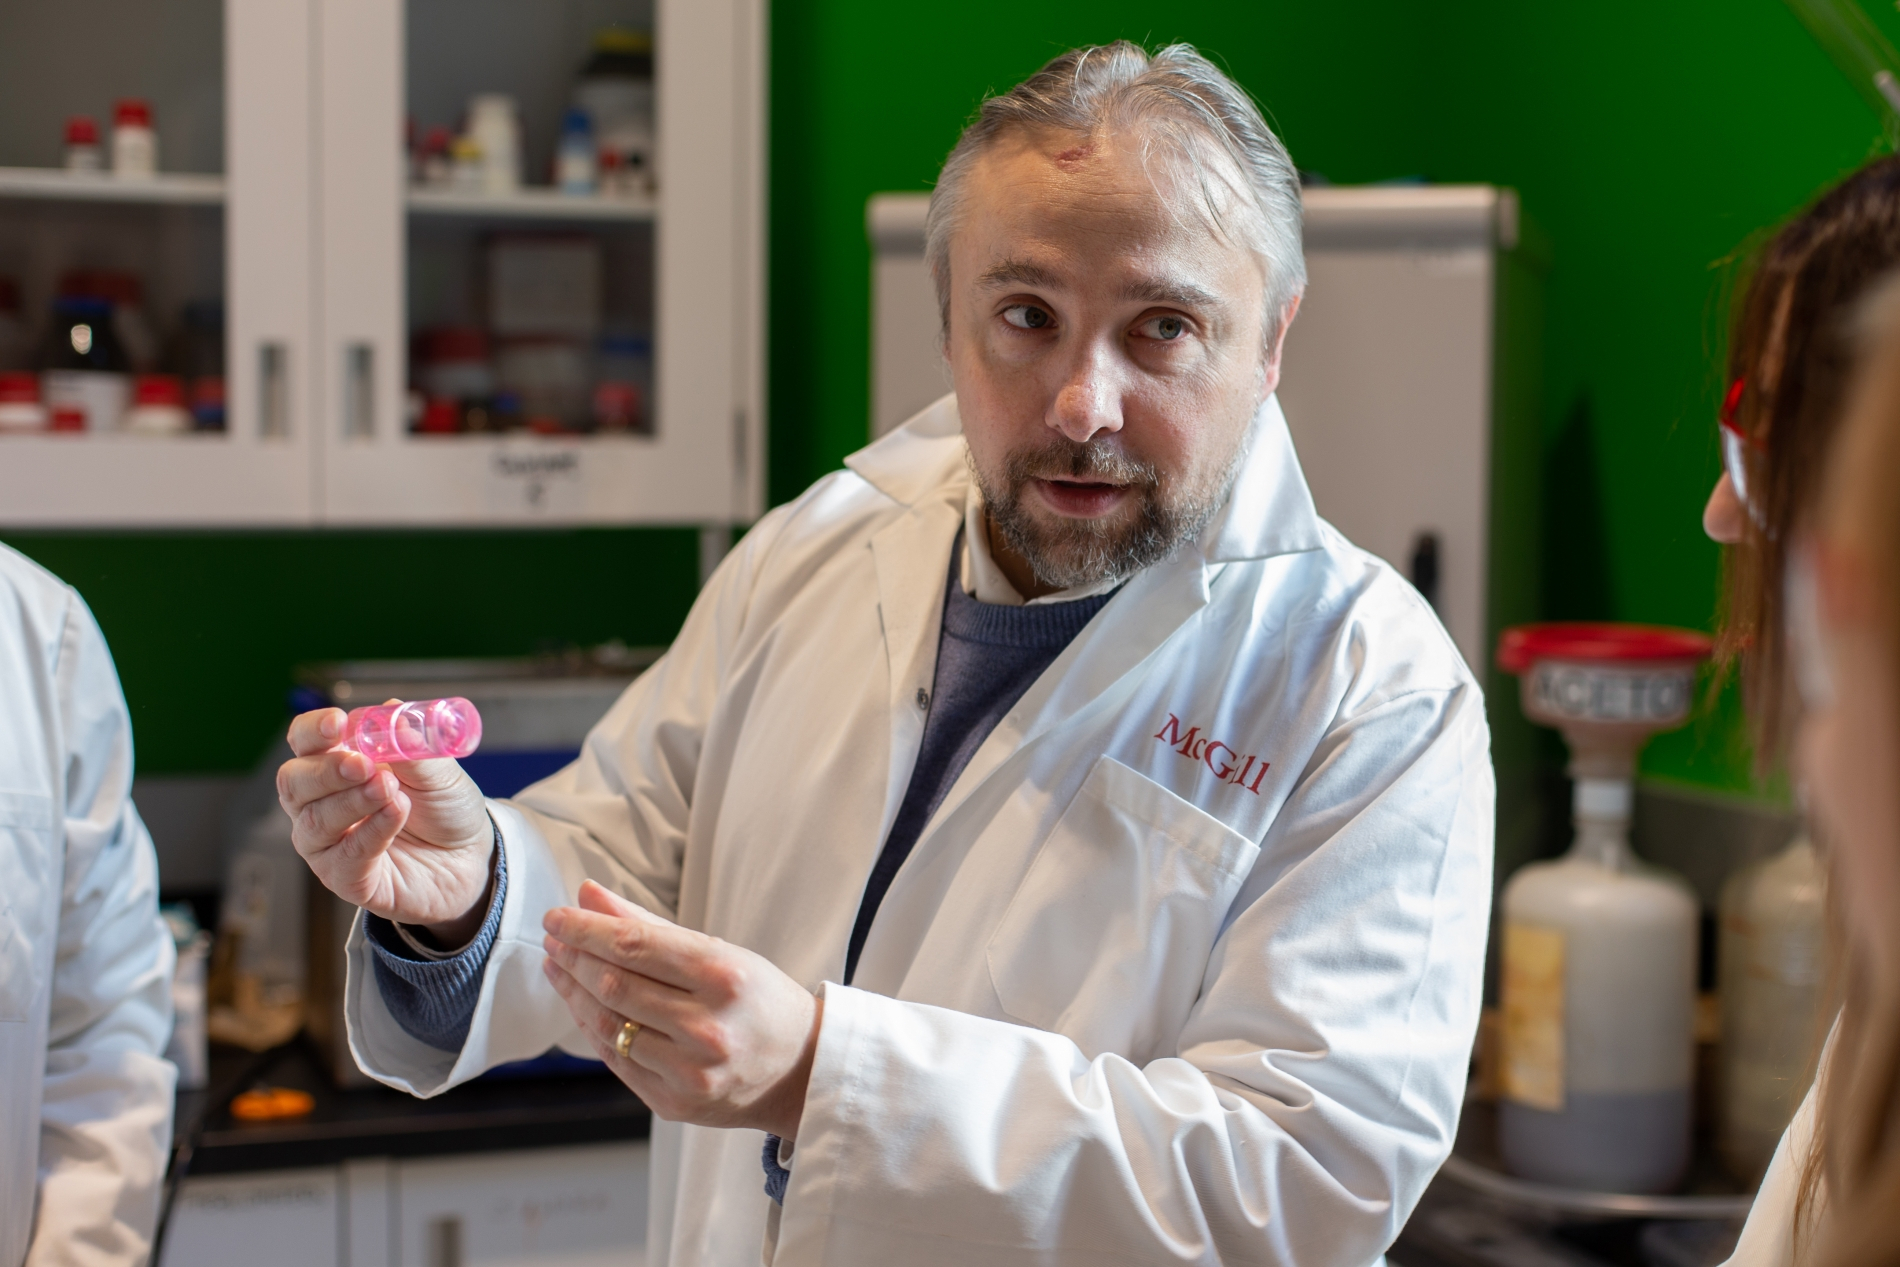 Professor Tomislav Friščić in a lab coat showing his students a vial